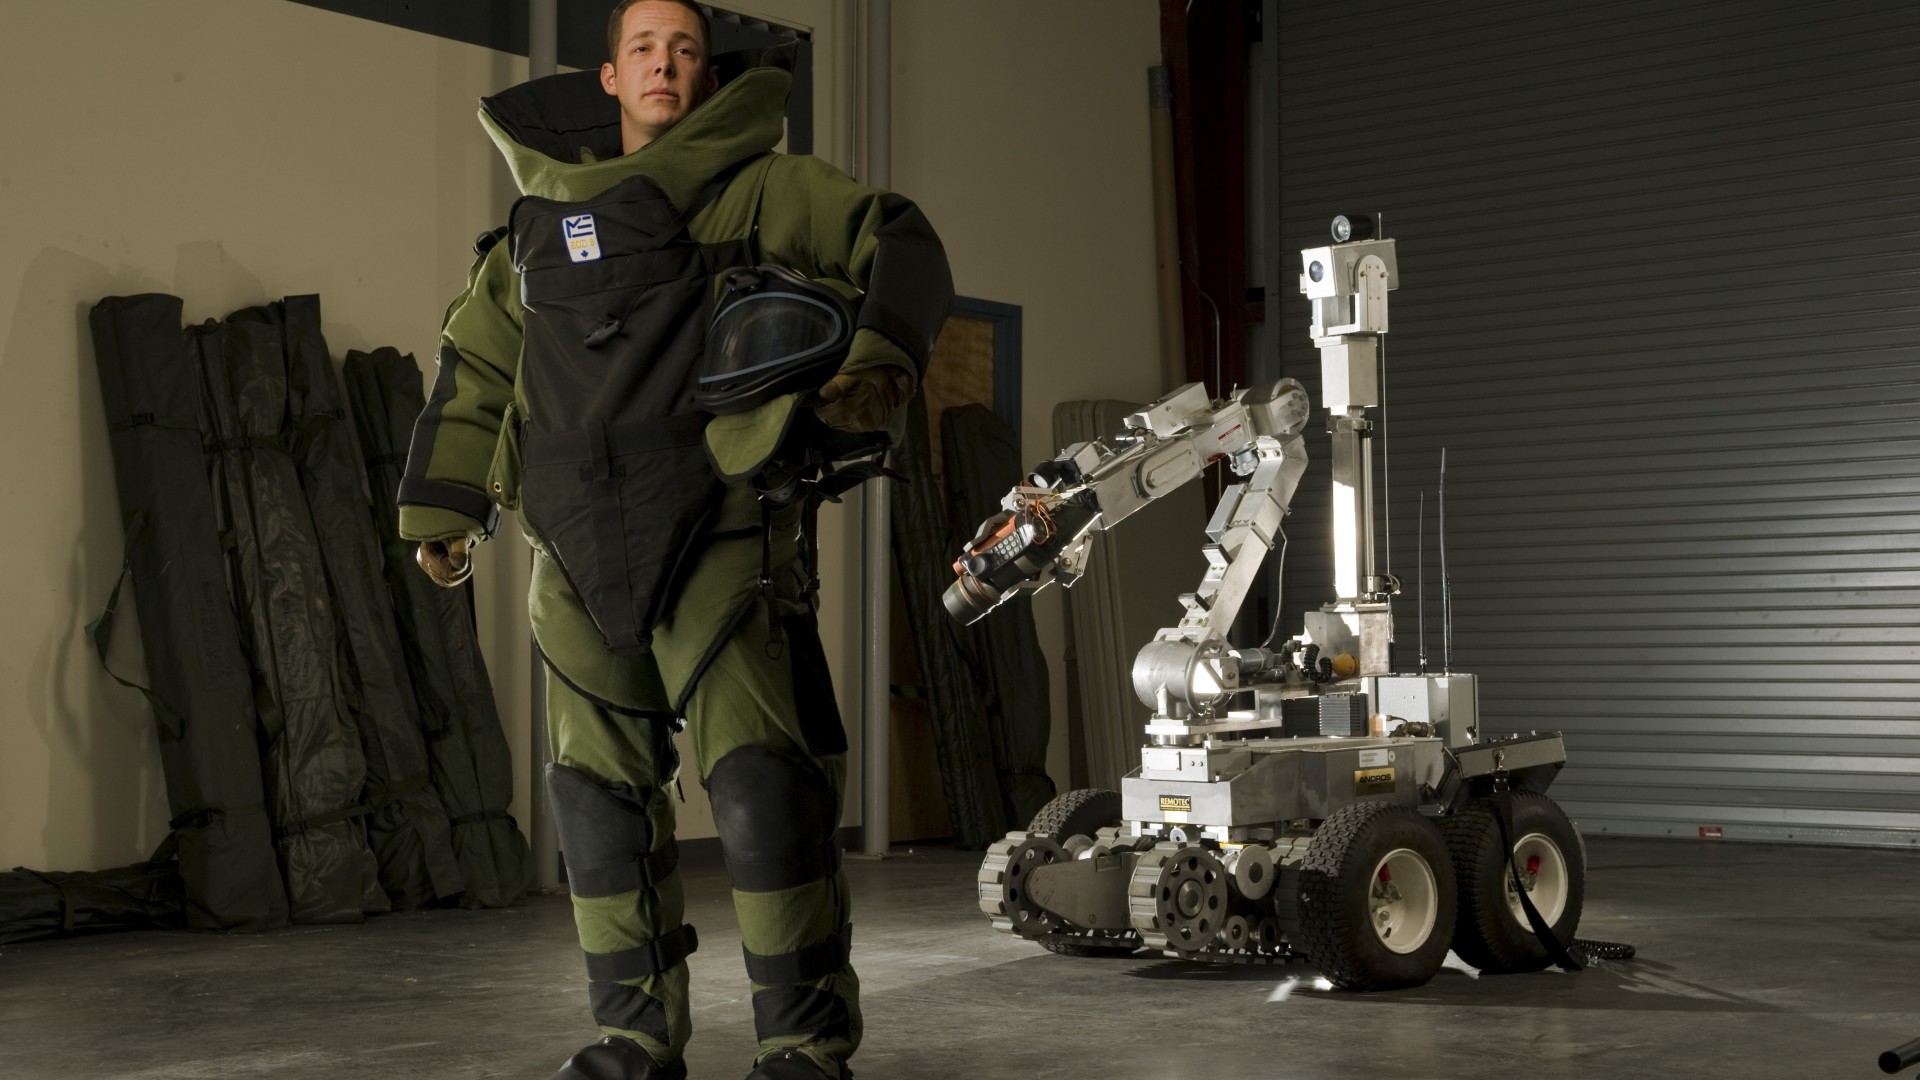 сапер, робот, Армия США, sapper, combat engineer, Sapper Tab, robot, combat support, photo art, Stacy Pearsall (horizontal)